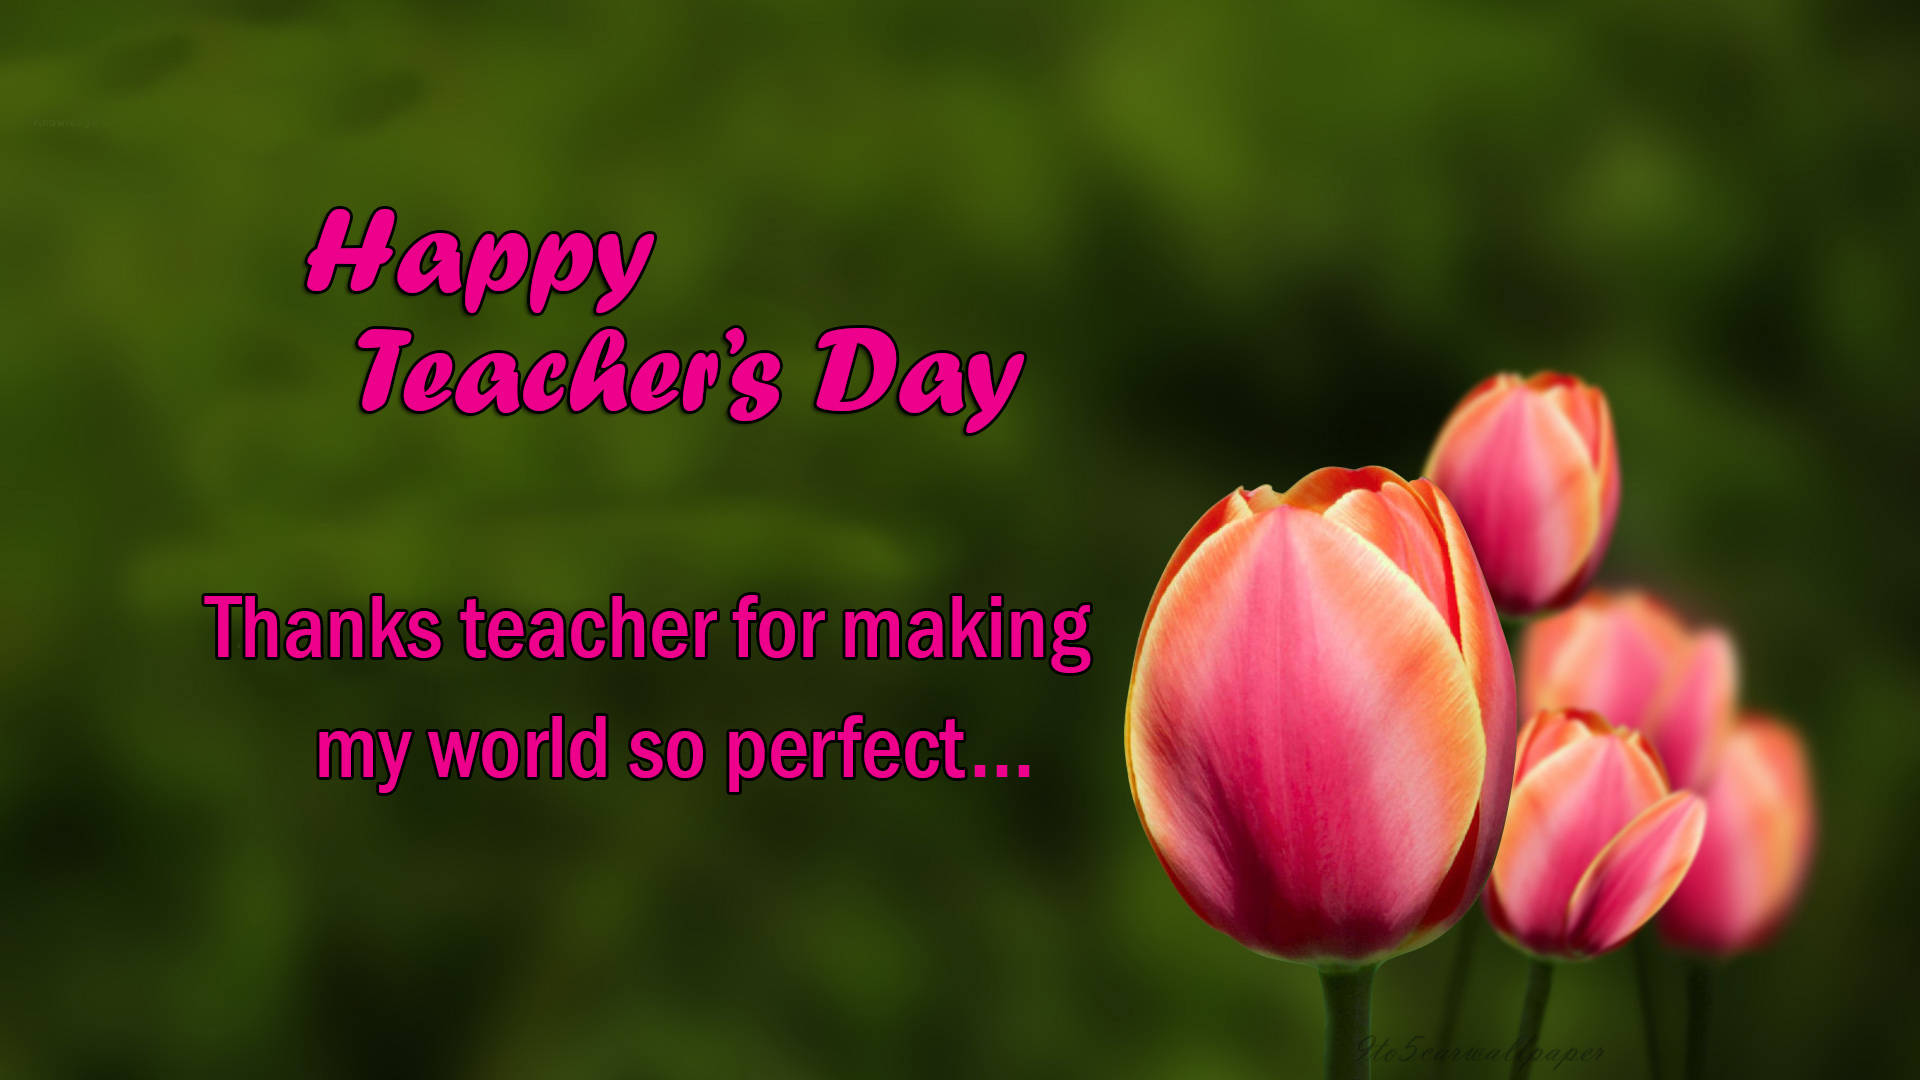 Happy Teachers' Day Perfect World Background